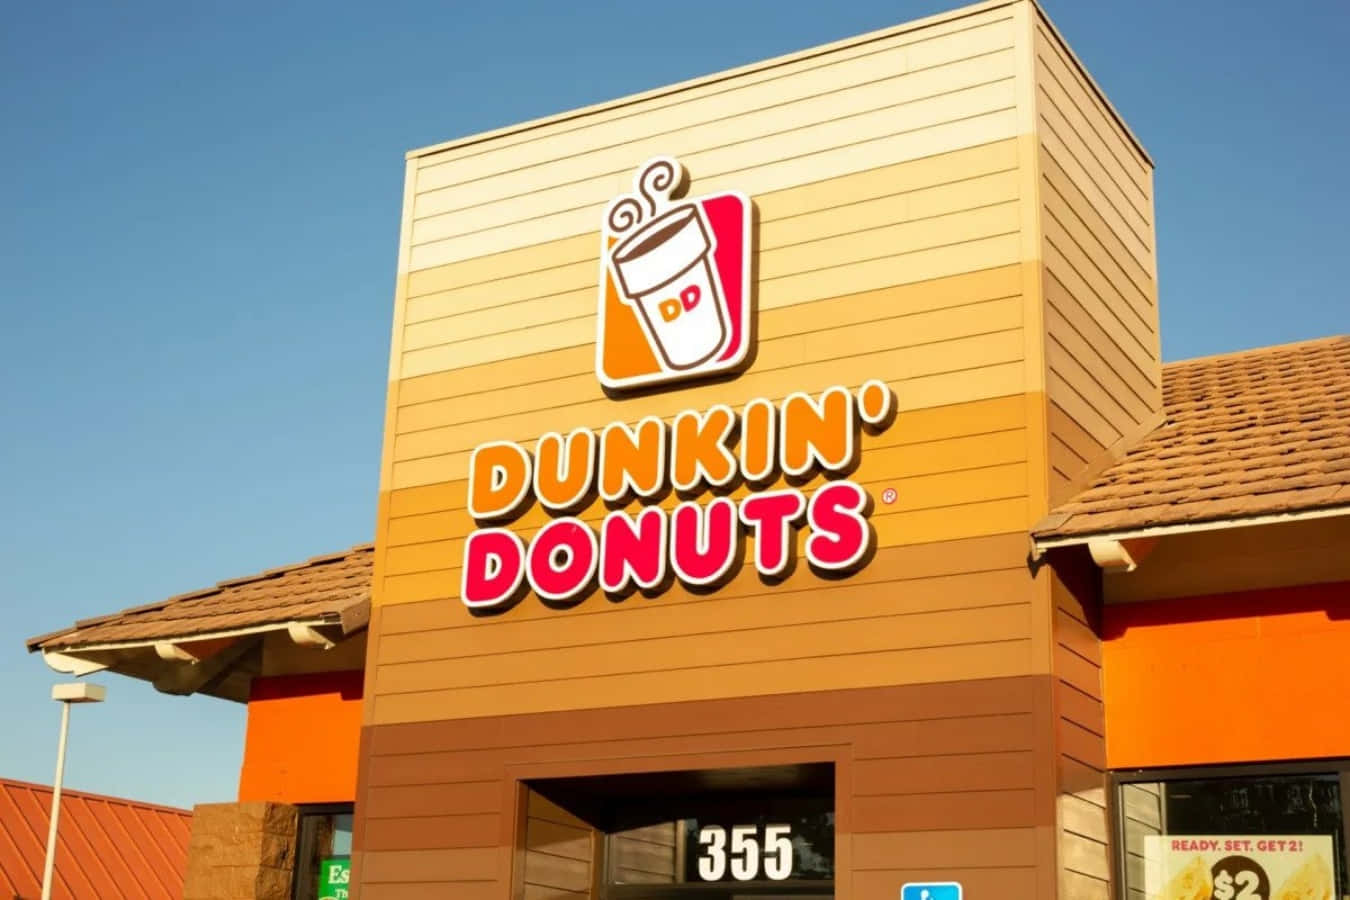 Enjoying a classic Dunkin’ Donuts coffee.